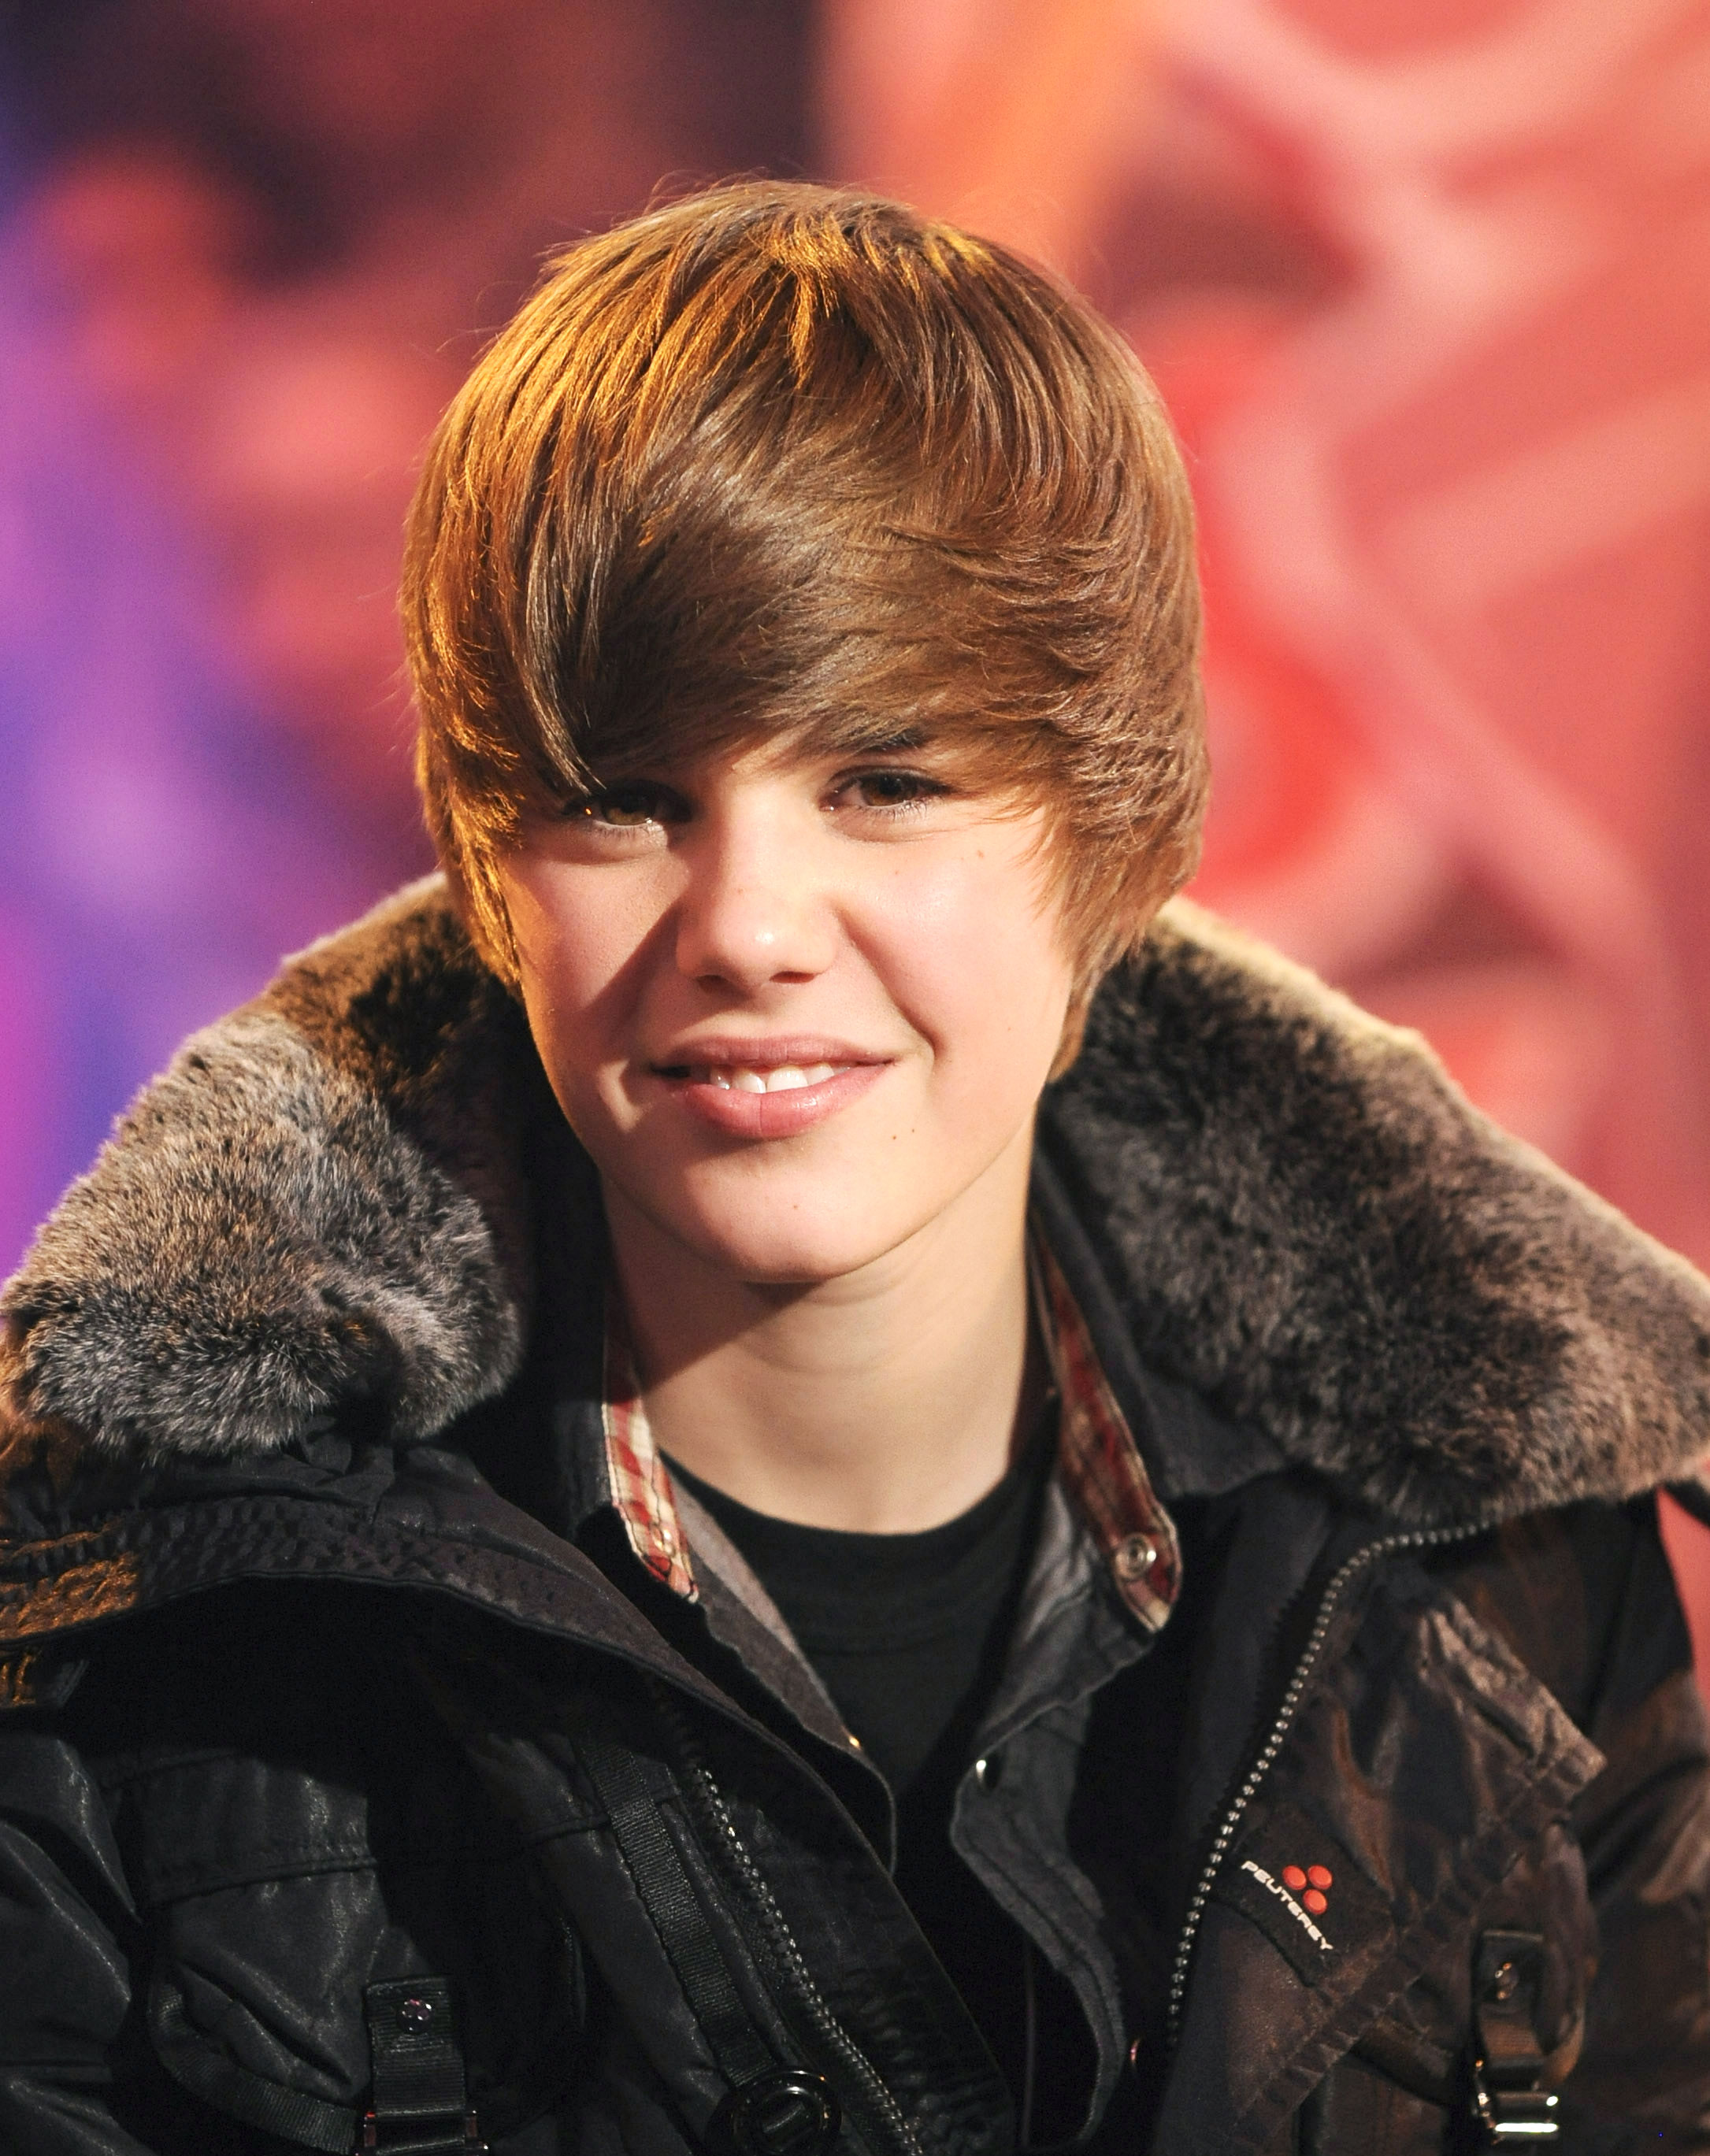 30 Photos That Show Justin Bieber's Wild Transformation Through the Years